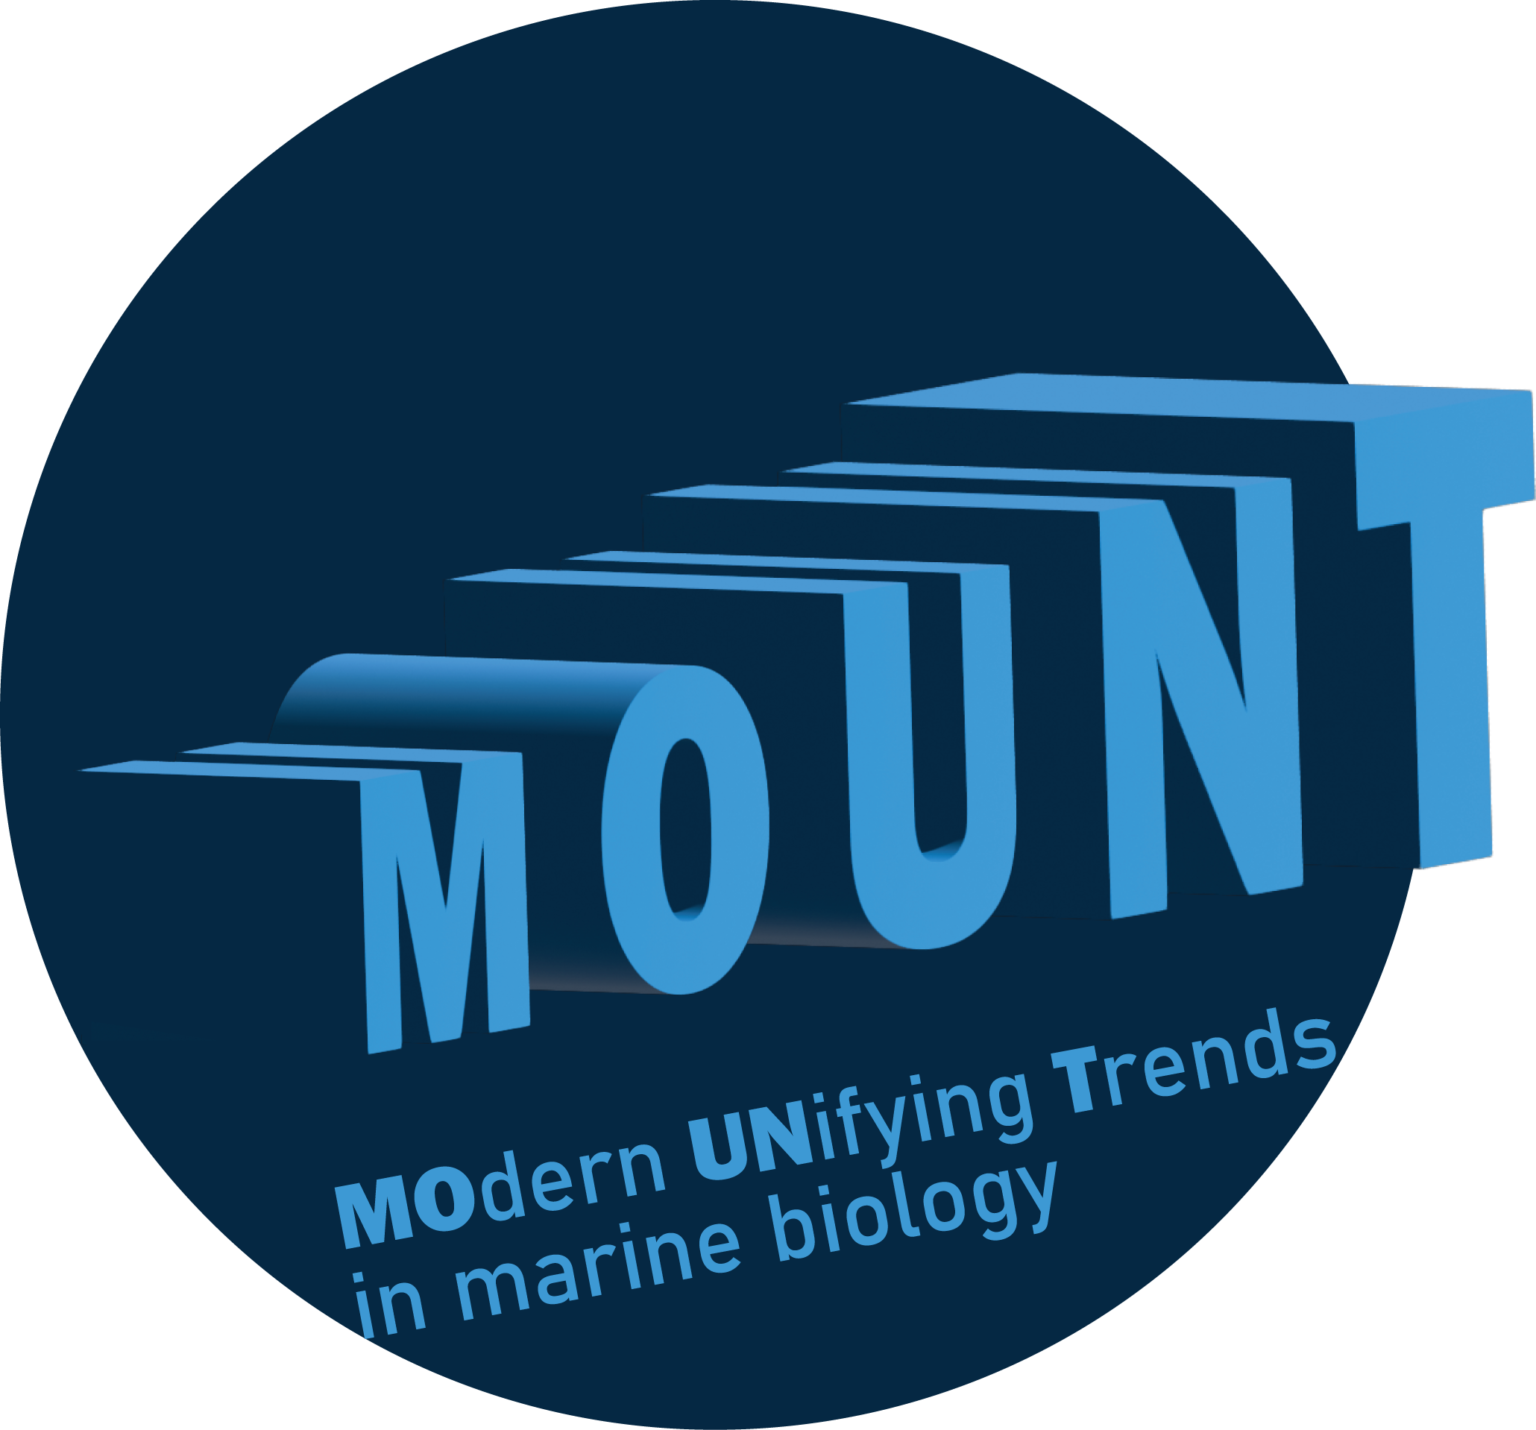 MOUNT (MOdern UNifying Trends in marine biology)